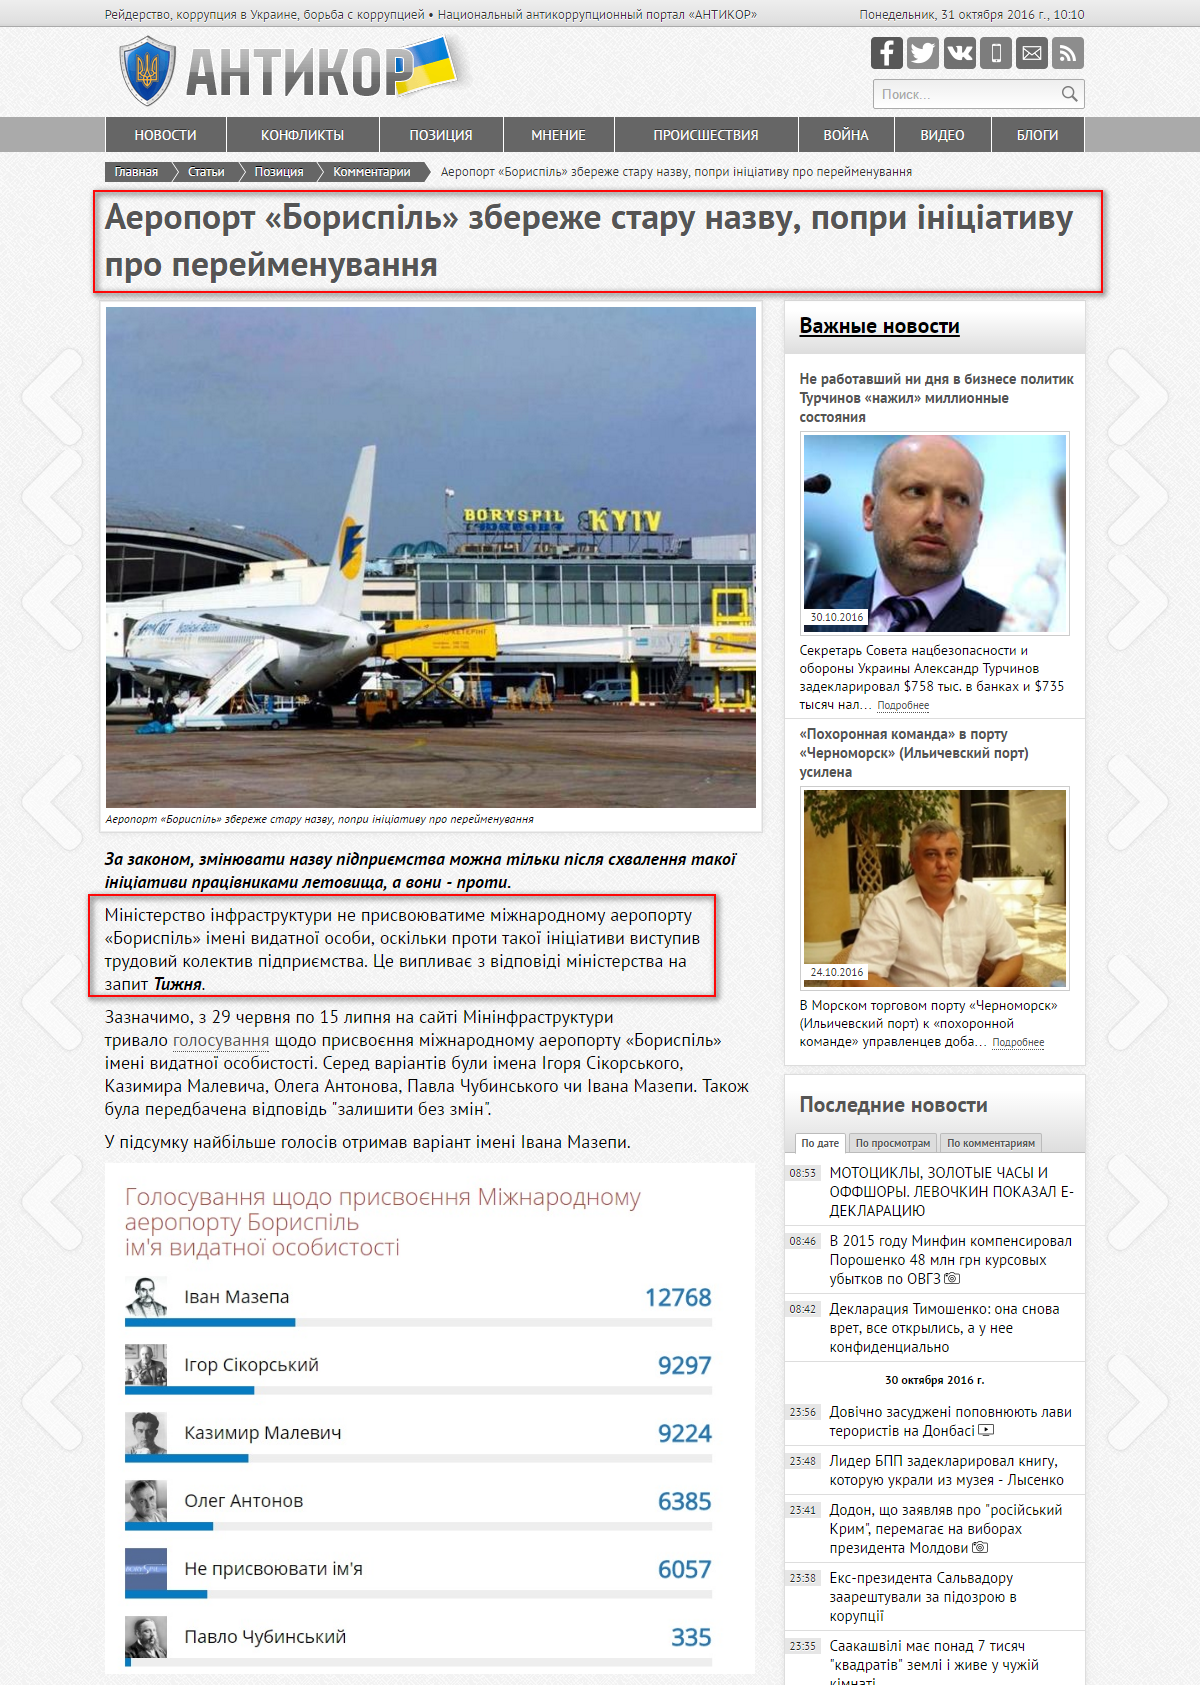 http://antikor.com.ua/articles/123957-aeroport_borispilj_zberehe_staru_nazvu_popri_initsiativu_pro_perejmenuvannja